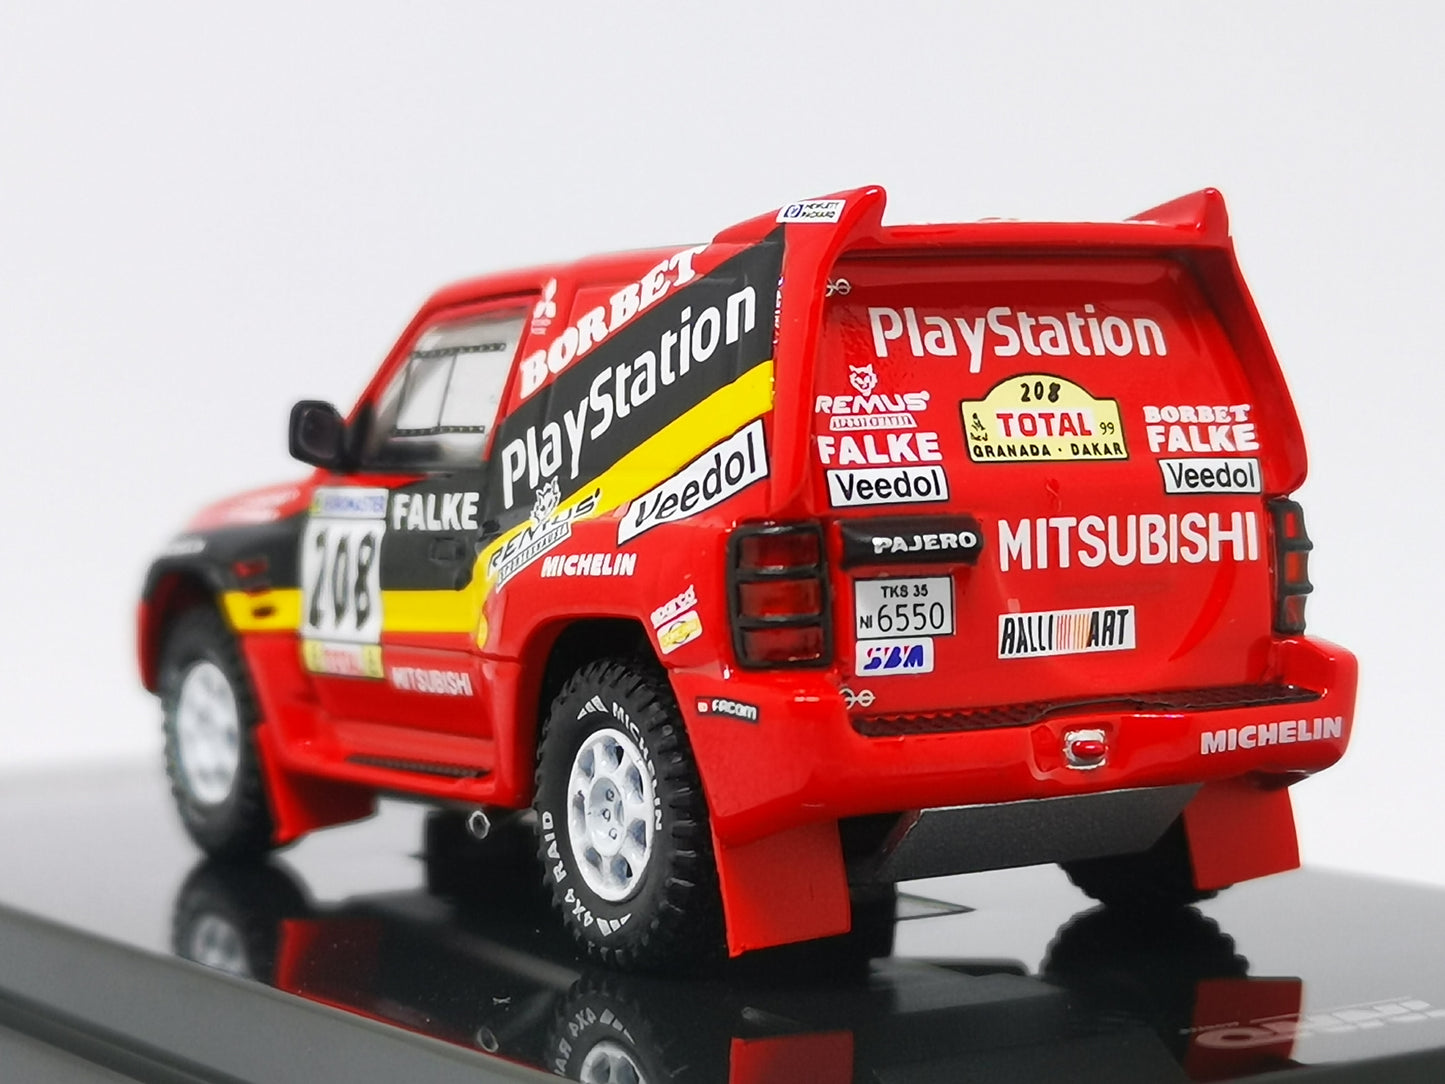 Inno64 Mitsubishi Pajero #208 Granada
Dakar Rally 1999